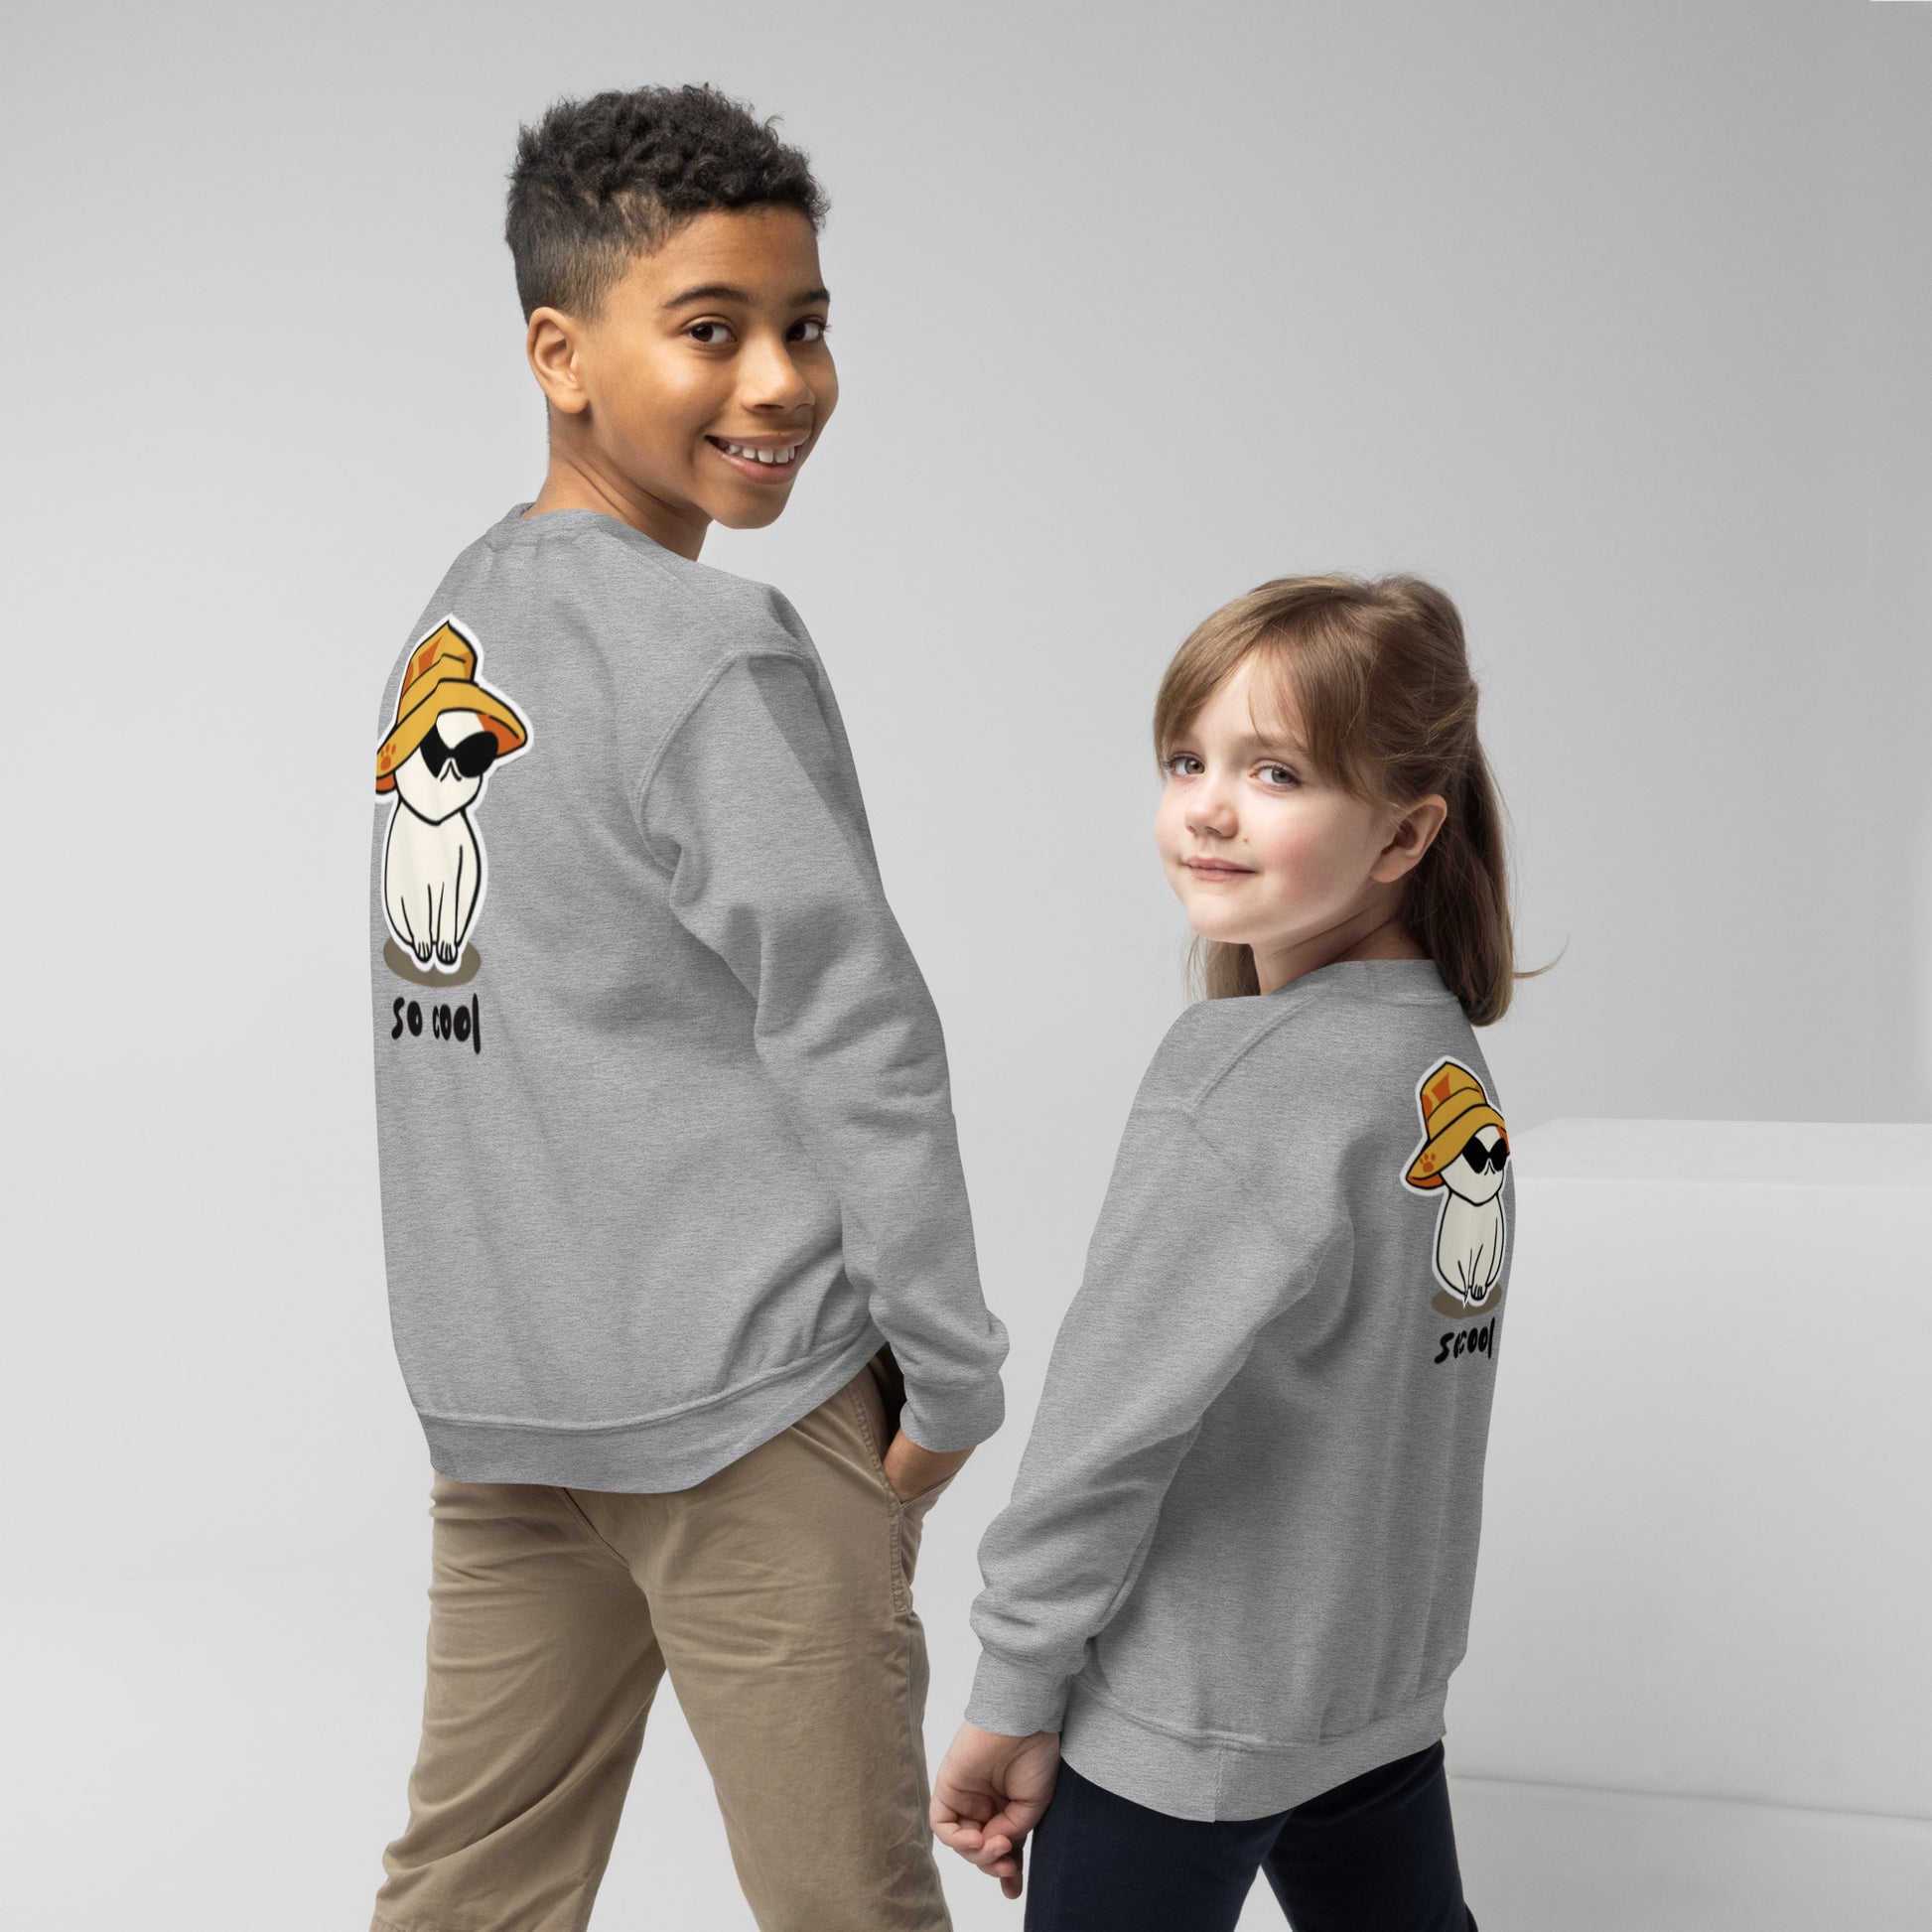 Youth Cool sweatshirt - Premium  from BlackMars  - Just £25.50! Shop now at BlackMars 25.50BlackMars 